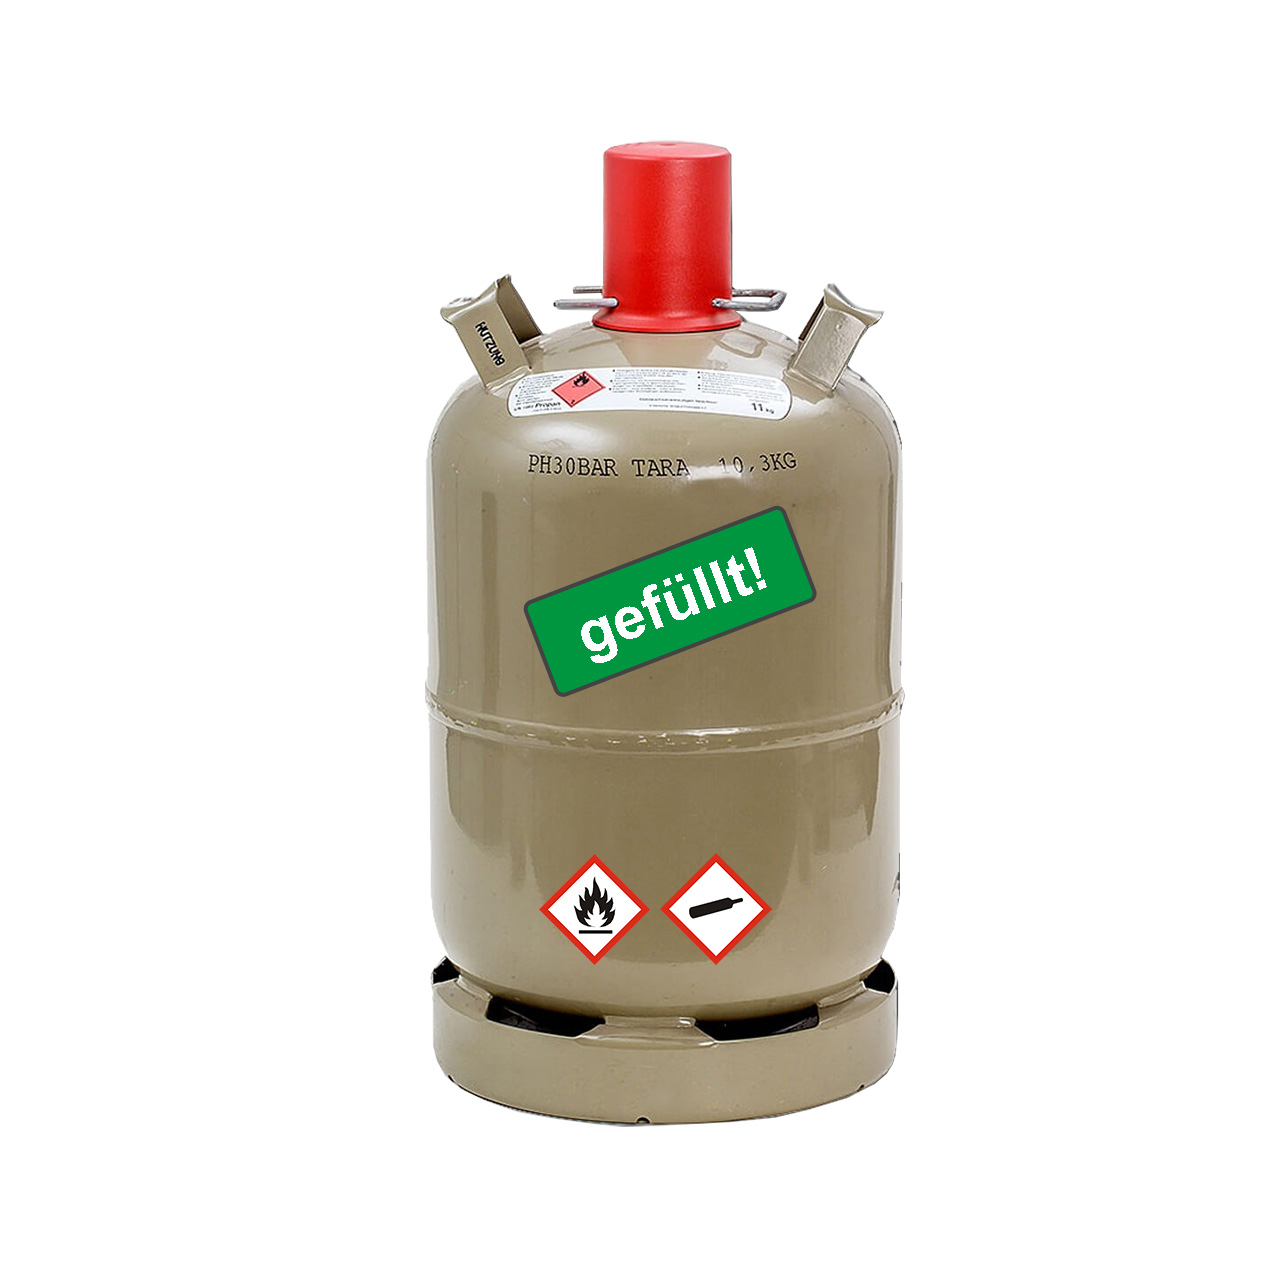 11 kg Propan-Gasflasche grau gefüllt für Gasgrill, Gaskocher, Gas-Heizofen uvm. 